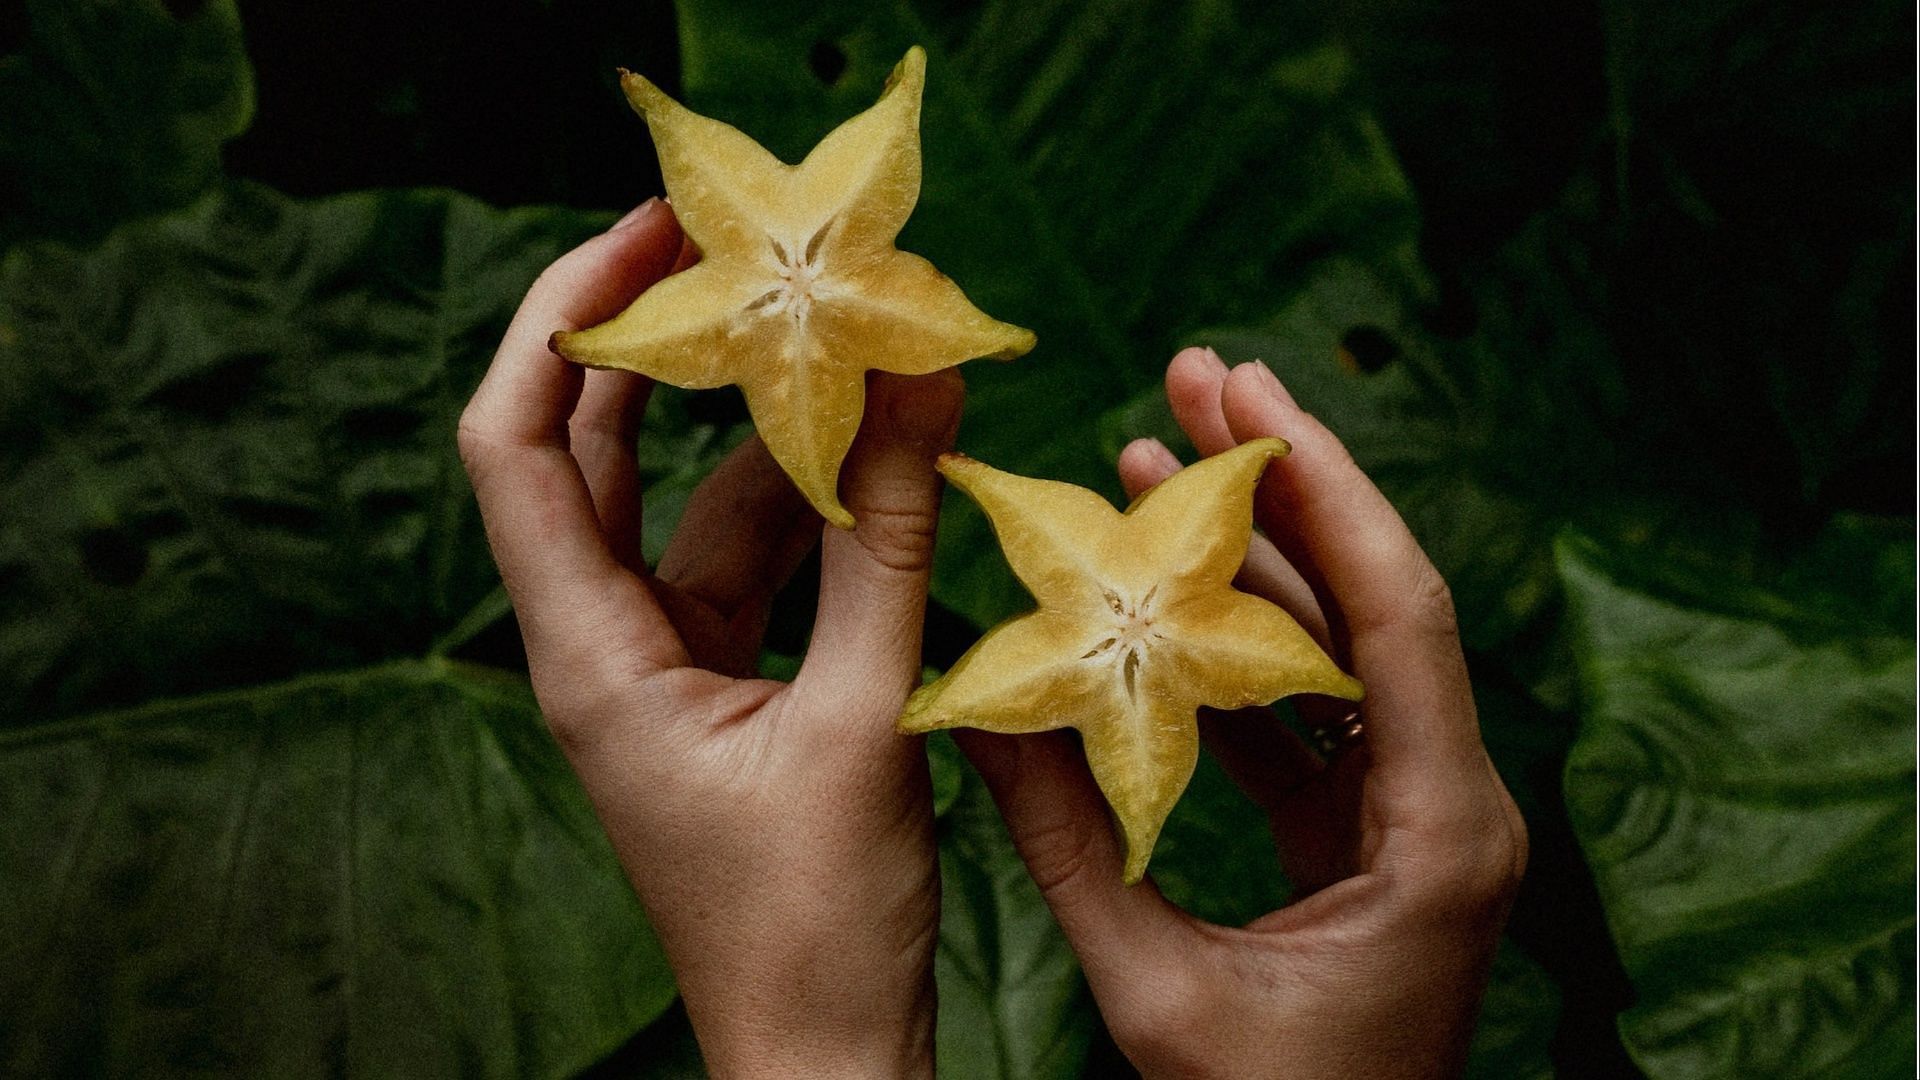 Starfruit resembles a star when cut horizontally. (Photo via Pexels/Iurii Laimin)